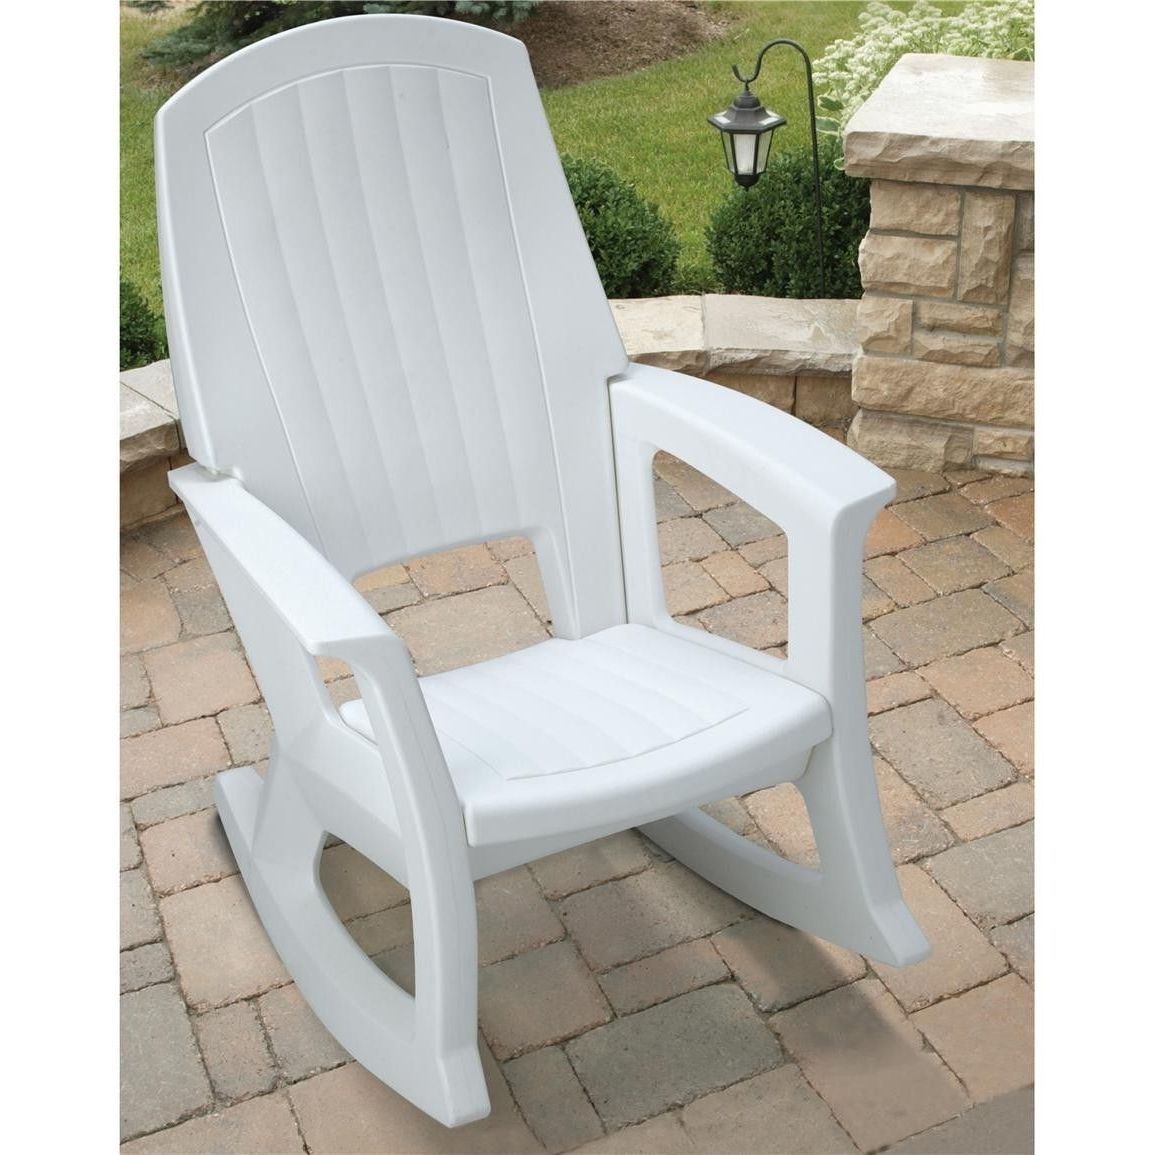 Preferred Semco Plastics White Resin Outdoor Patio Rocking Chair Semw : Rural Intended For White Resin Patio Rocking Chairs (View 1 of 20)